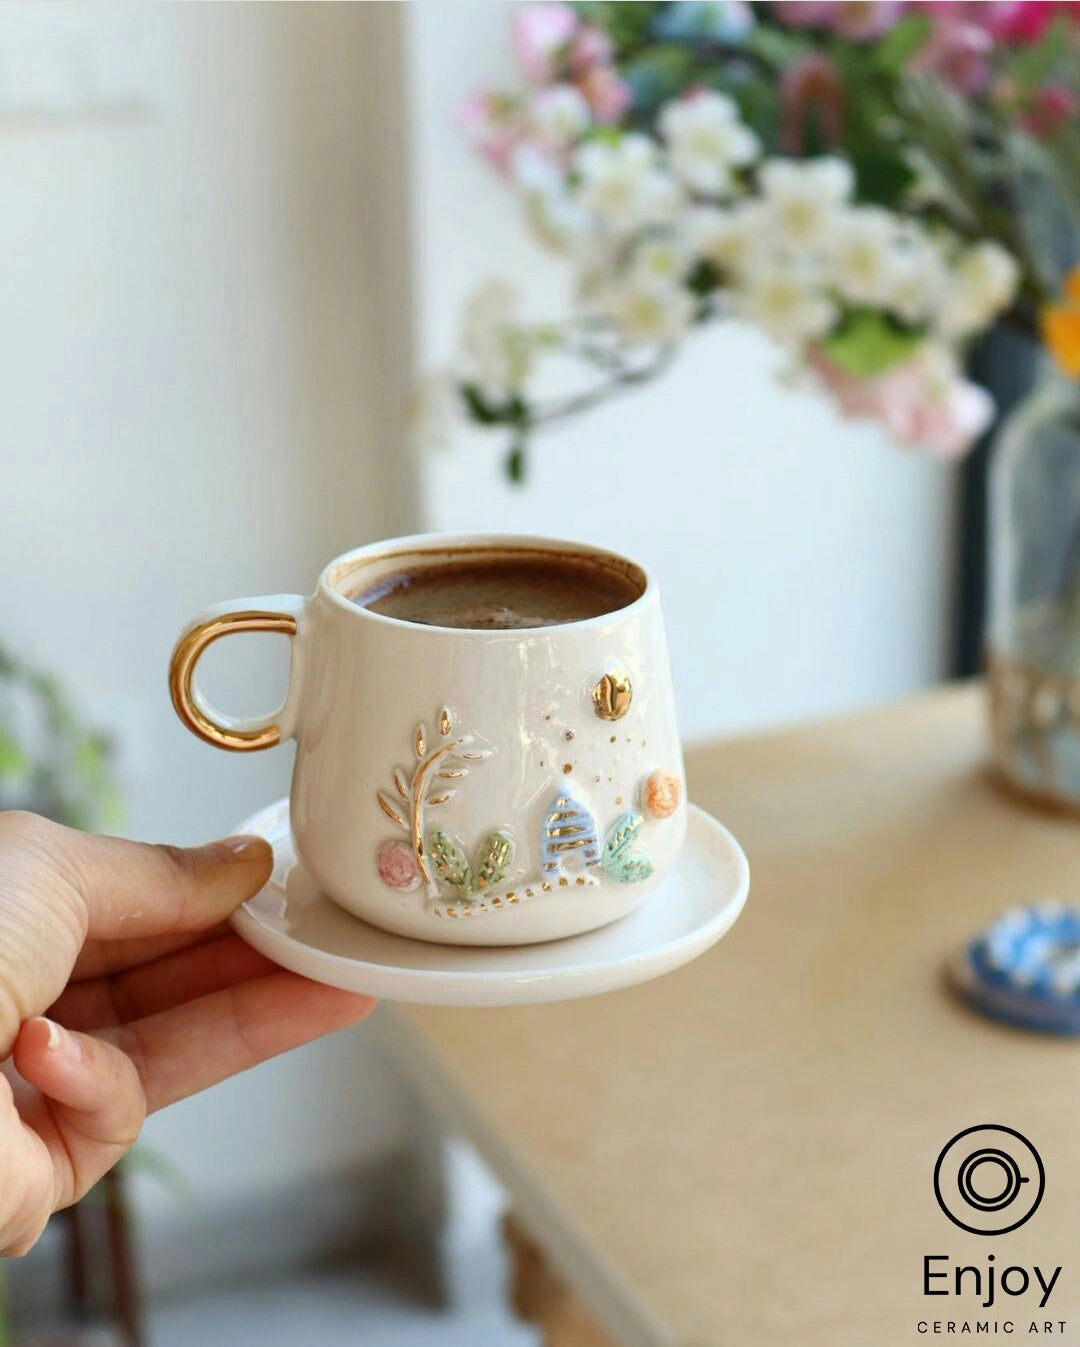 Happy Forest - Handmade Floral Espresso Cup & Saucer Set - 5.4 oz Ceramic Flower Coffee Mug with Gold Handle